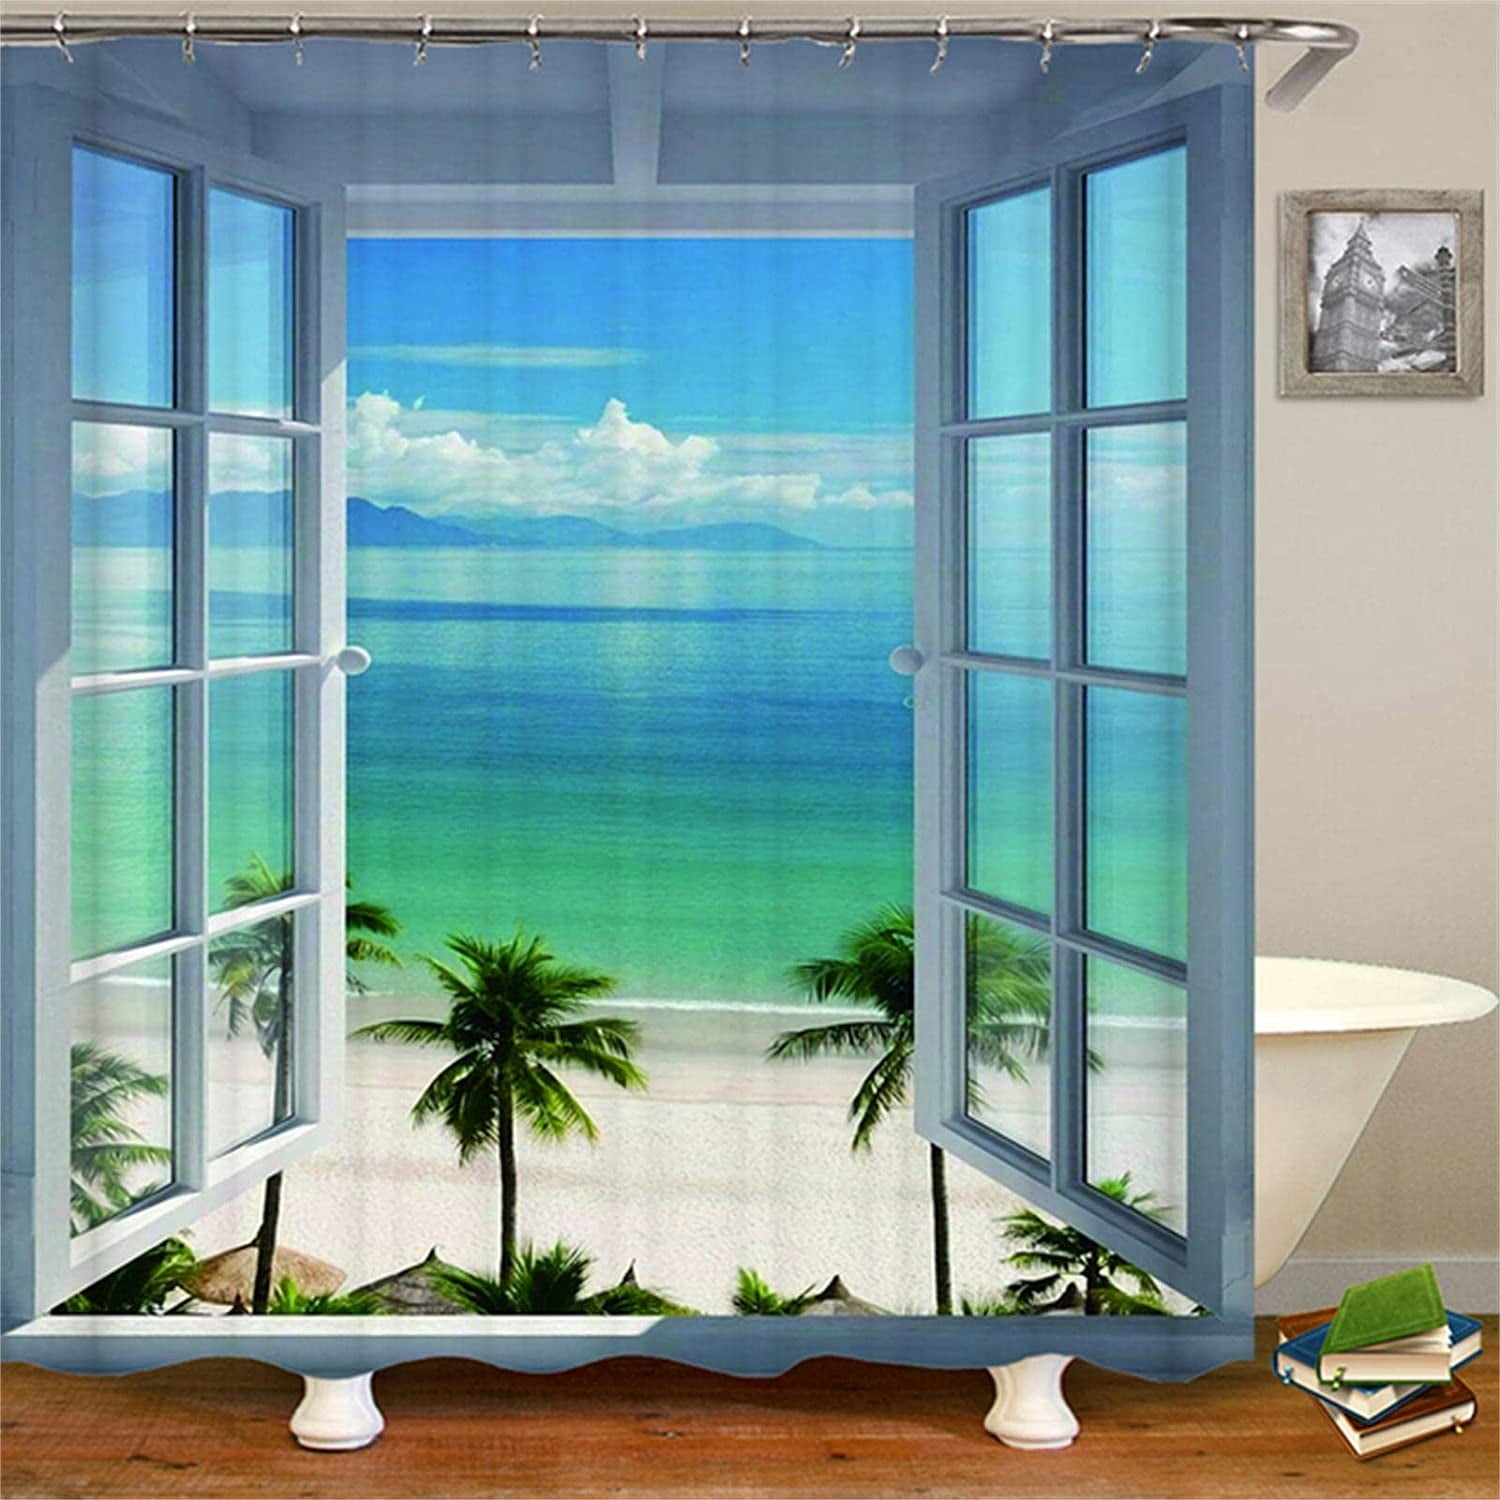 Coffee Grey 3D Ocean Shower Curtain, Historic Pirate Ship Exploration  Theme, Bathroom Decor Home Decor - Bluefink